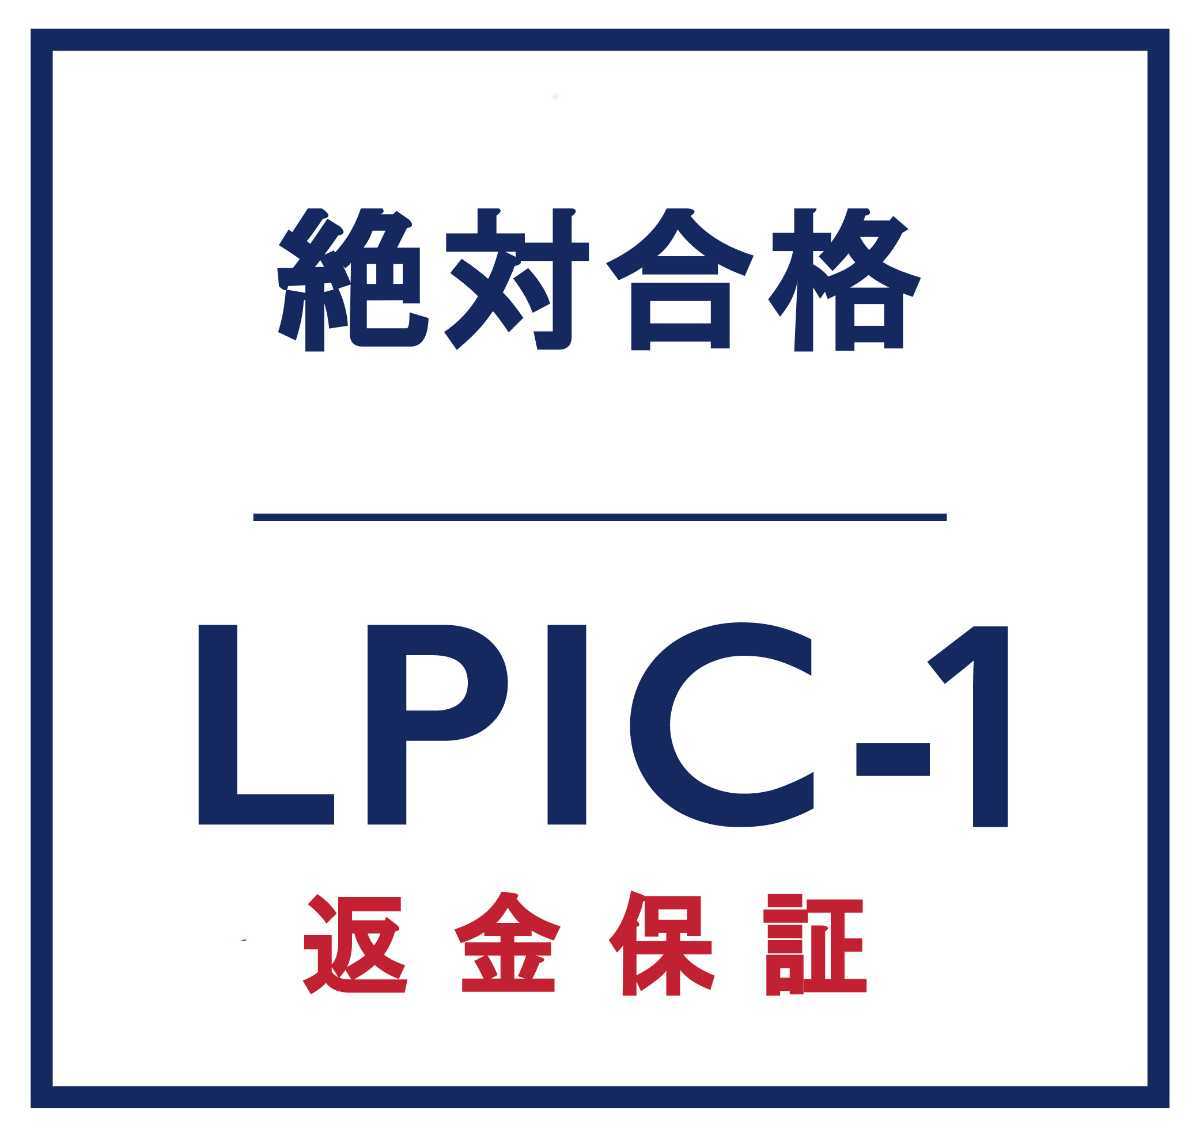 Linux LPIC レベル 1 V5.0 認定資格, 101-500 問題集, 返金保証, スマホ閲覧対応, 日本語版, 2023/3/22 検証済